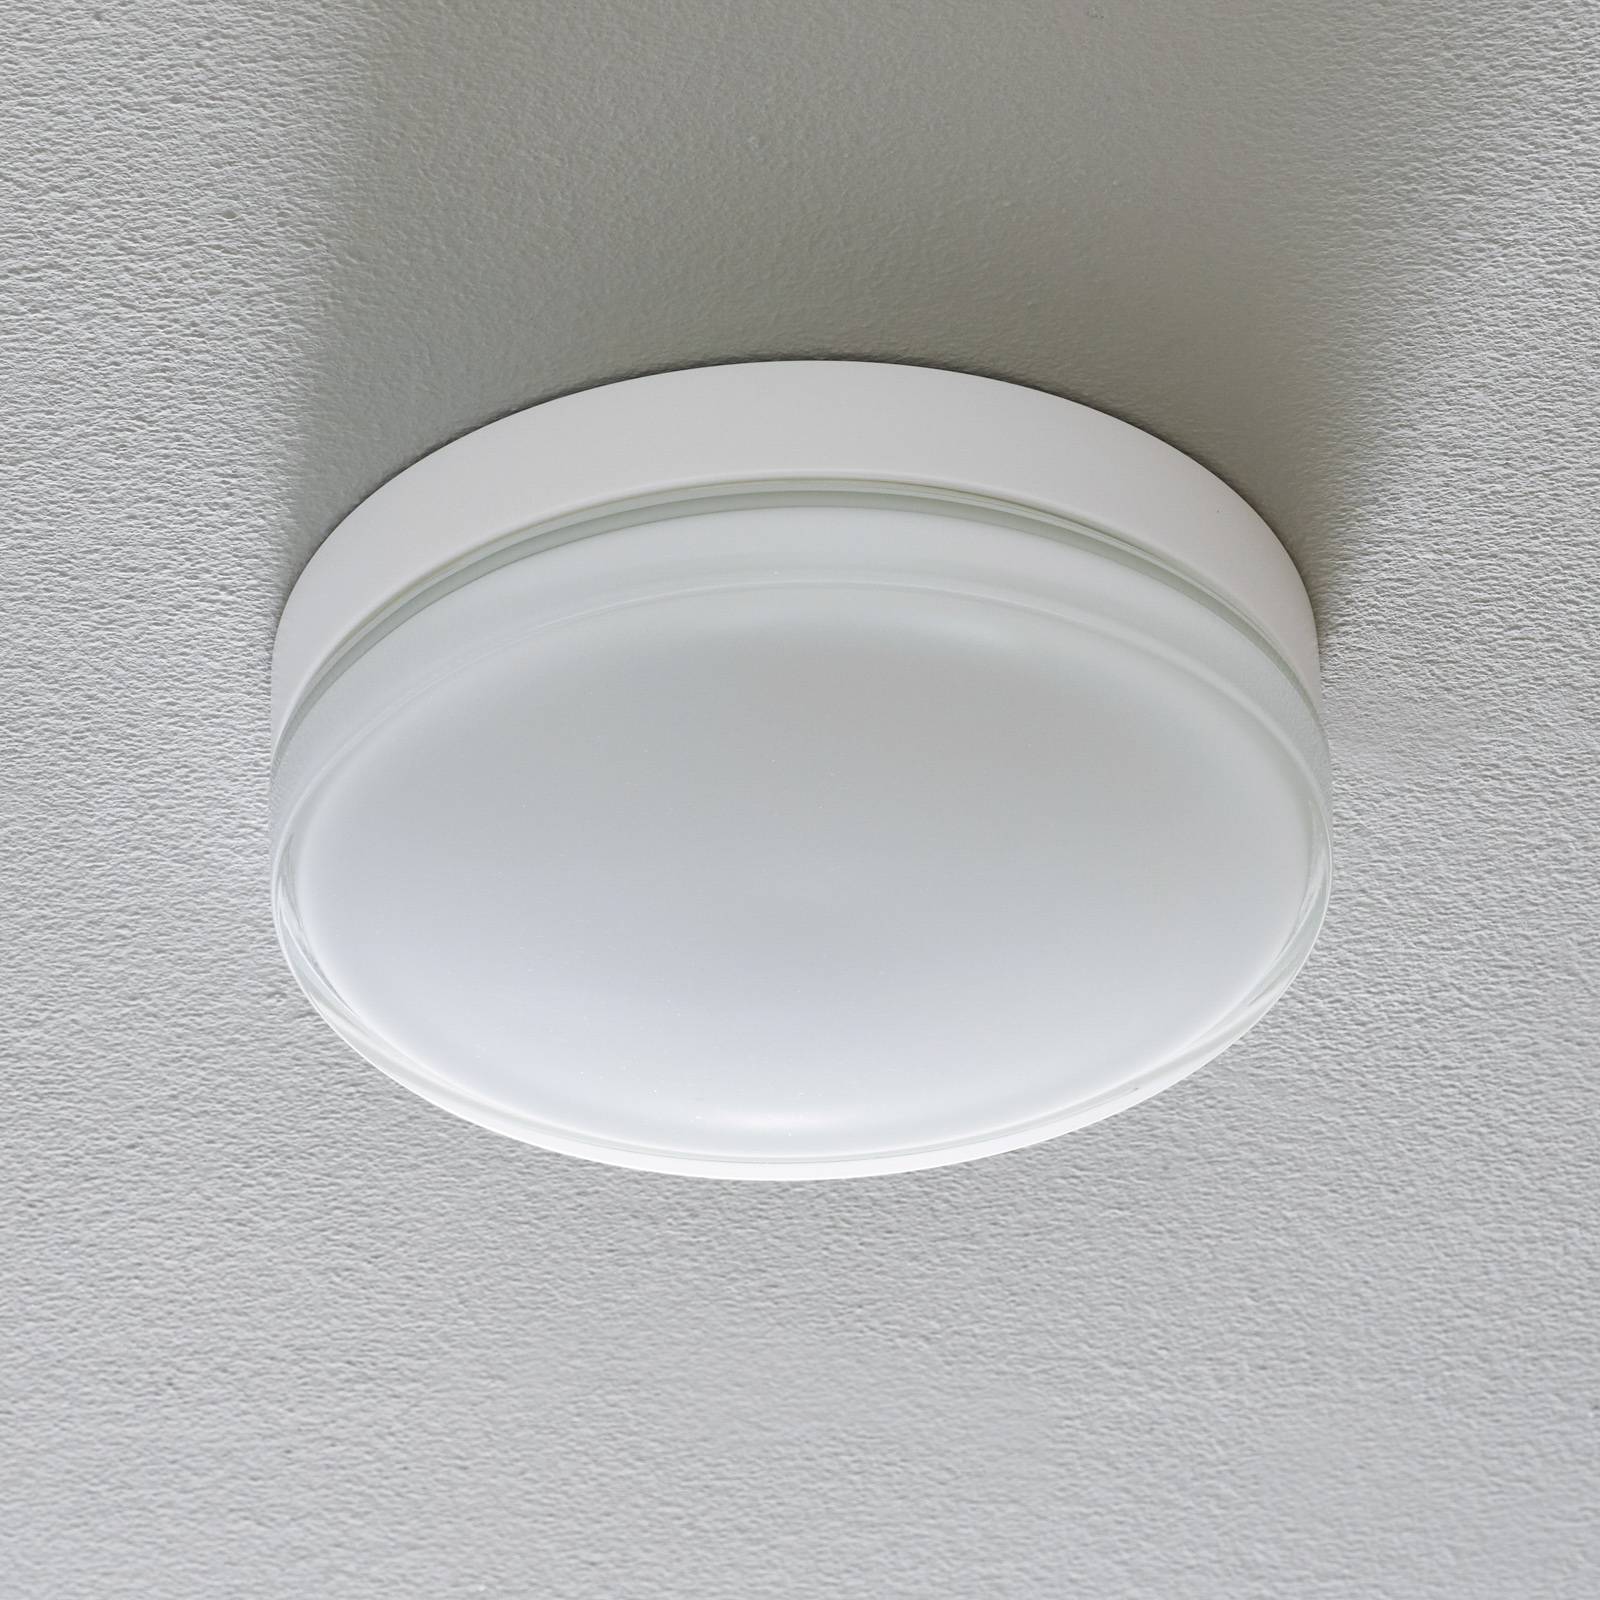 BEGA 12128 lampa sufitowa LED DALI 930 biały 26cm